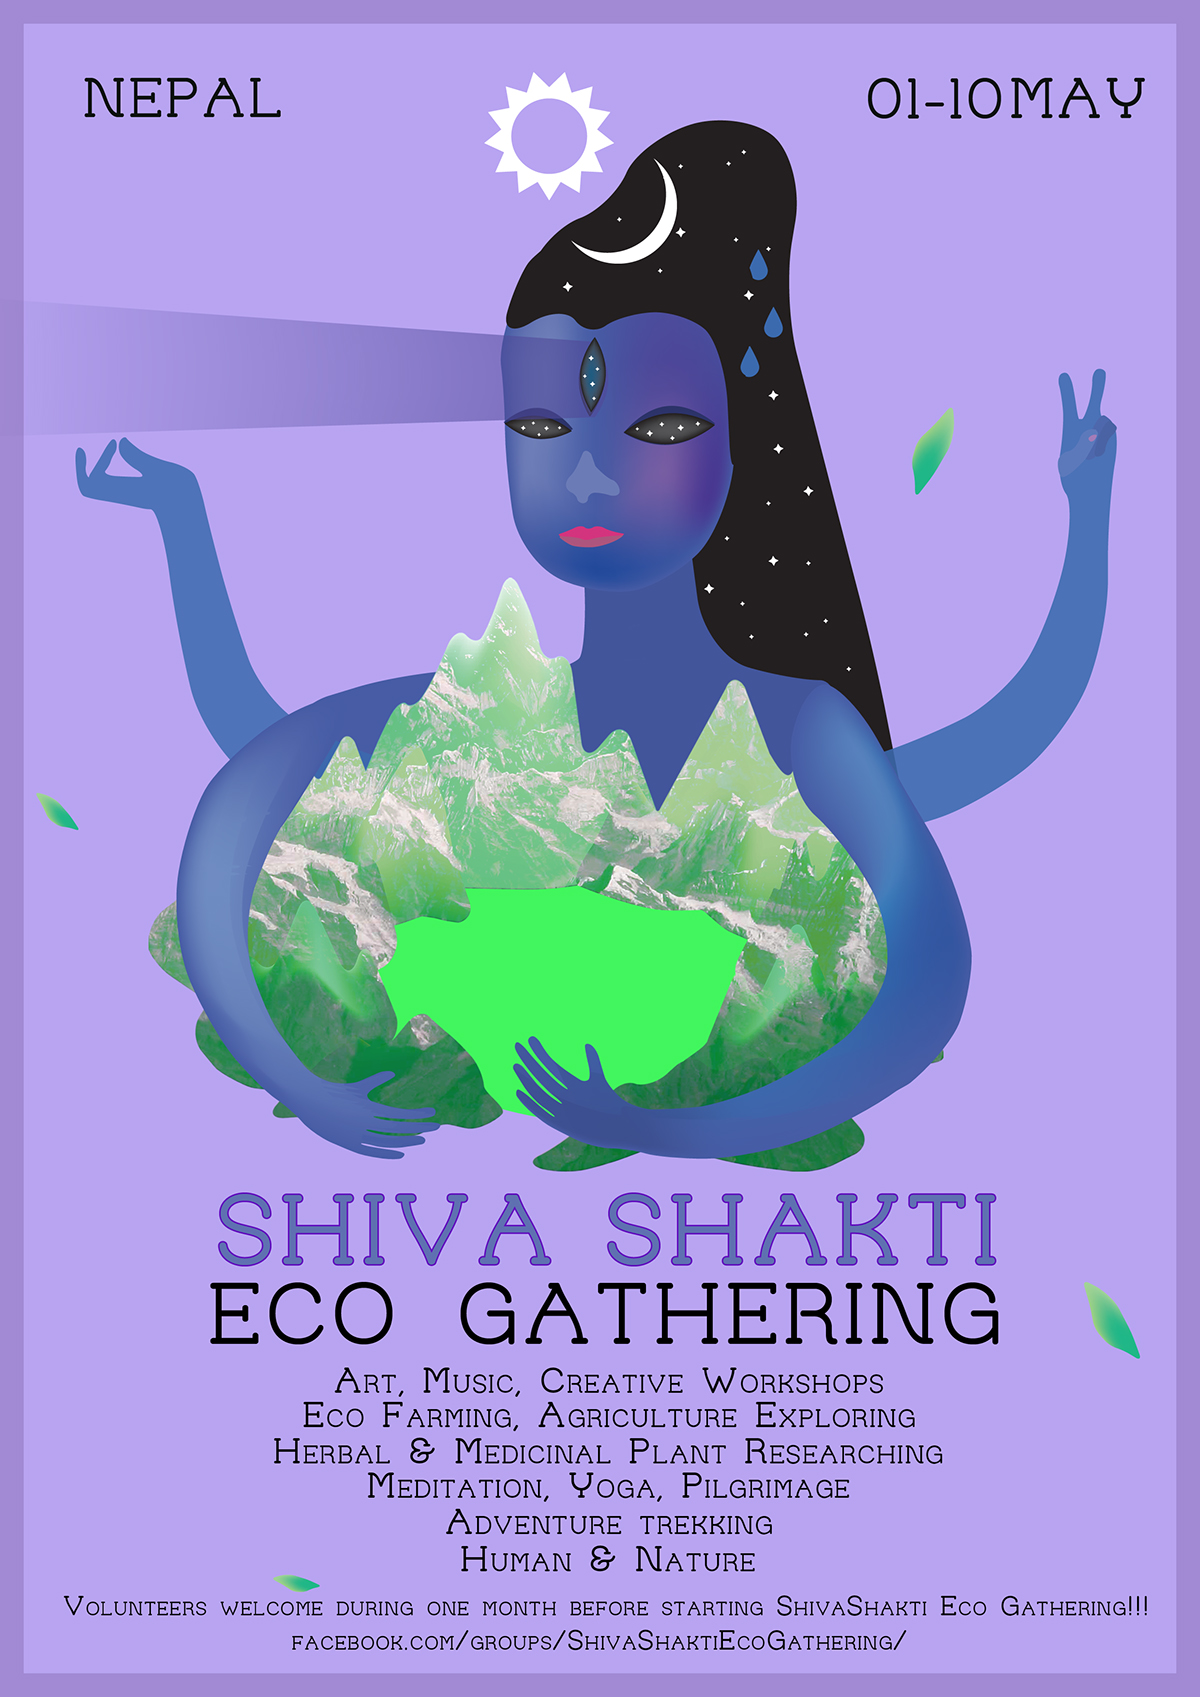 shiva festival nepal mountains Nature fest Hindu flyer poster card